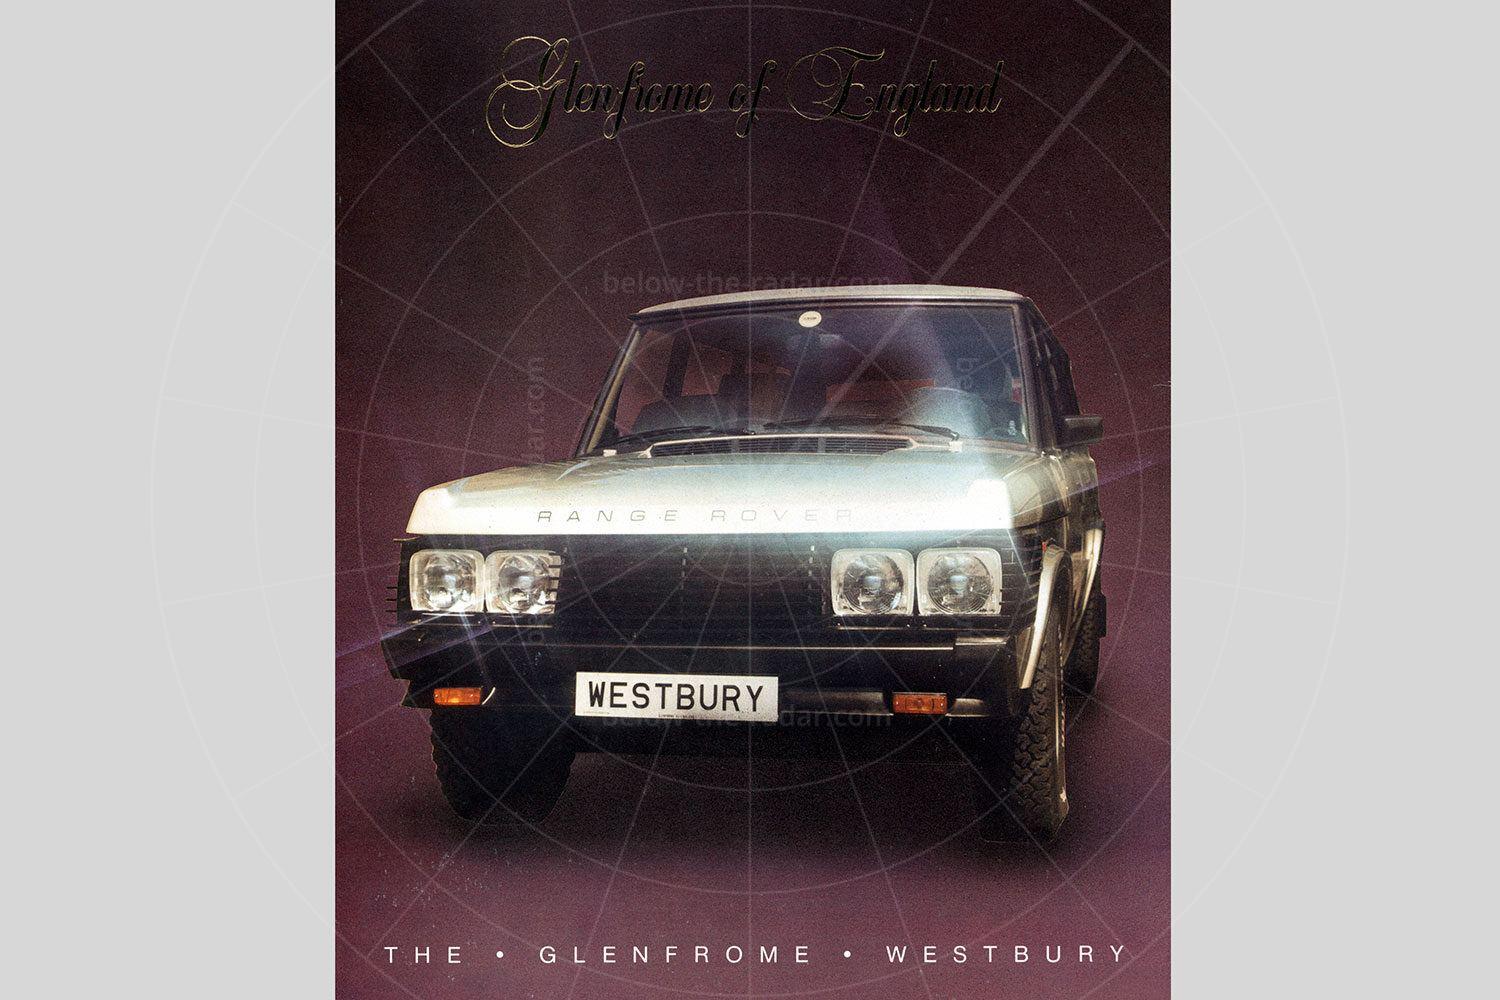 Glenfrome Westbury brochure Pic: magiccarpics.co.uk | Glenfrome Westbury brochure